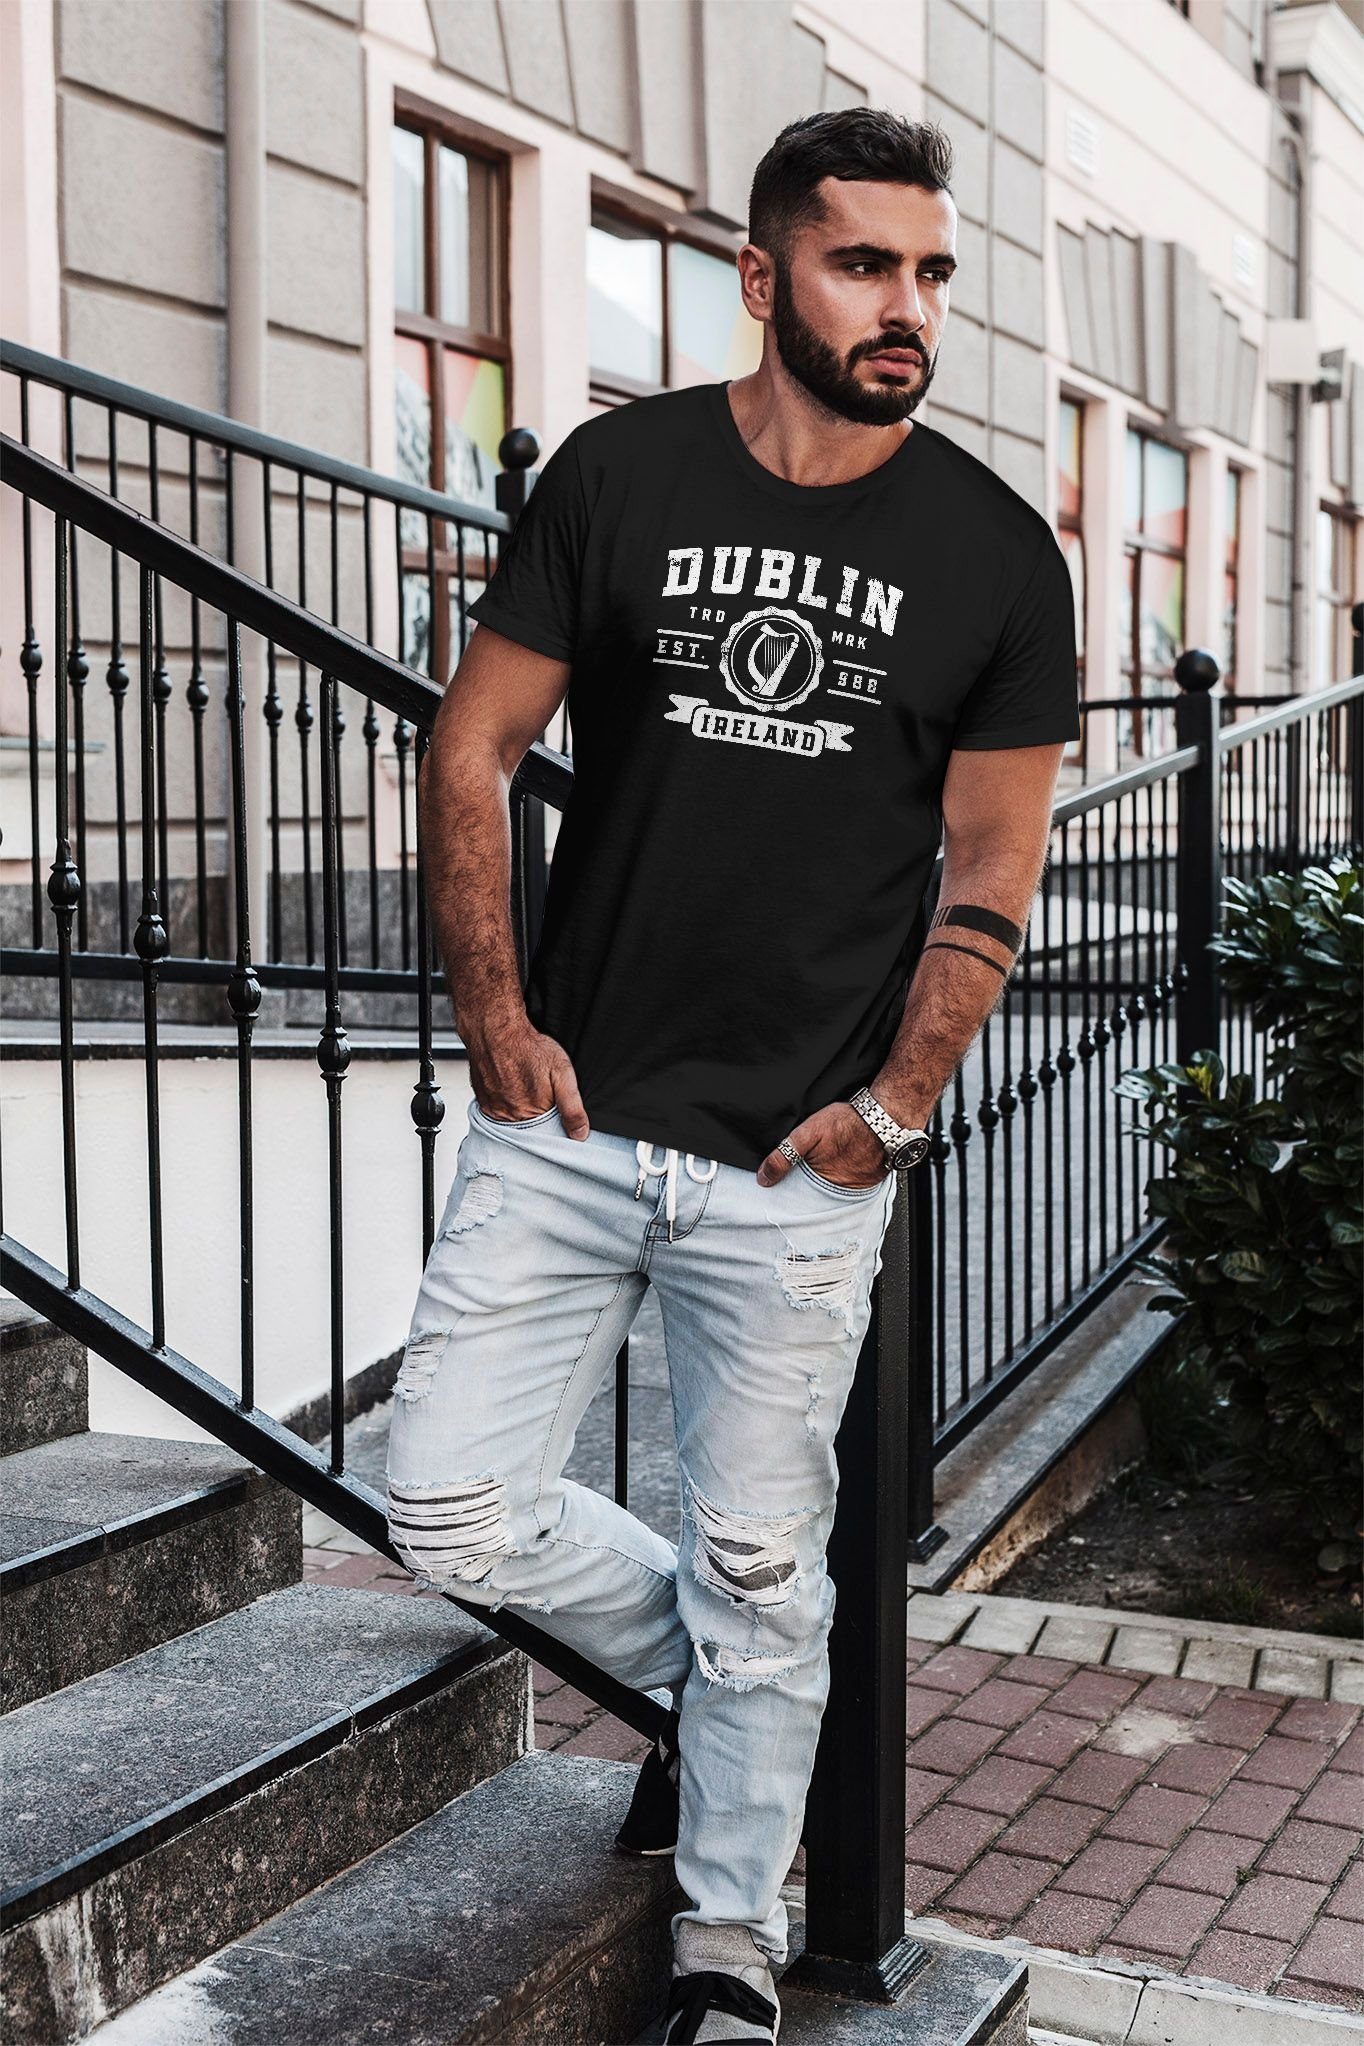 Neverless Print-Shirt Herren T-Shirt Dublin Print Irland Neverless® Fashion Print Retro Aufdruck mit Design Schrift Streetstyle